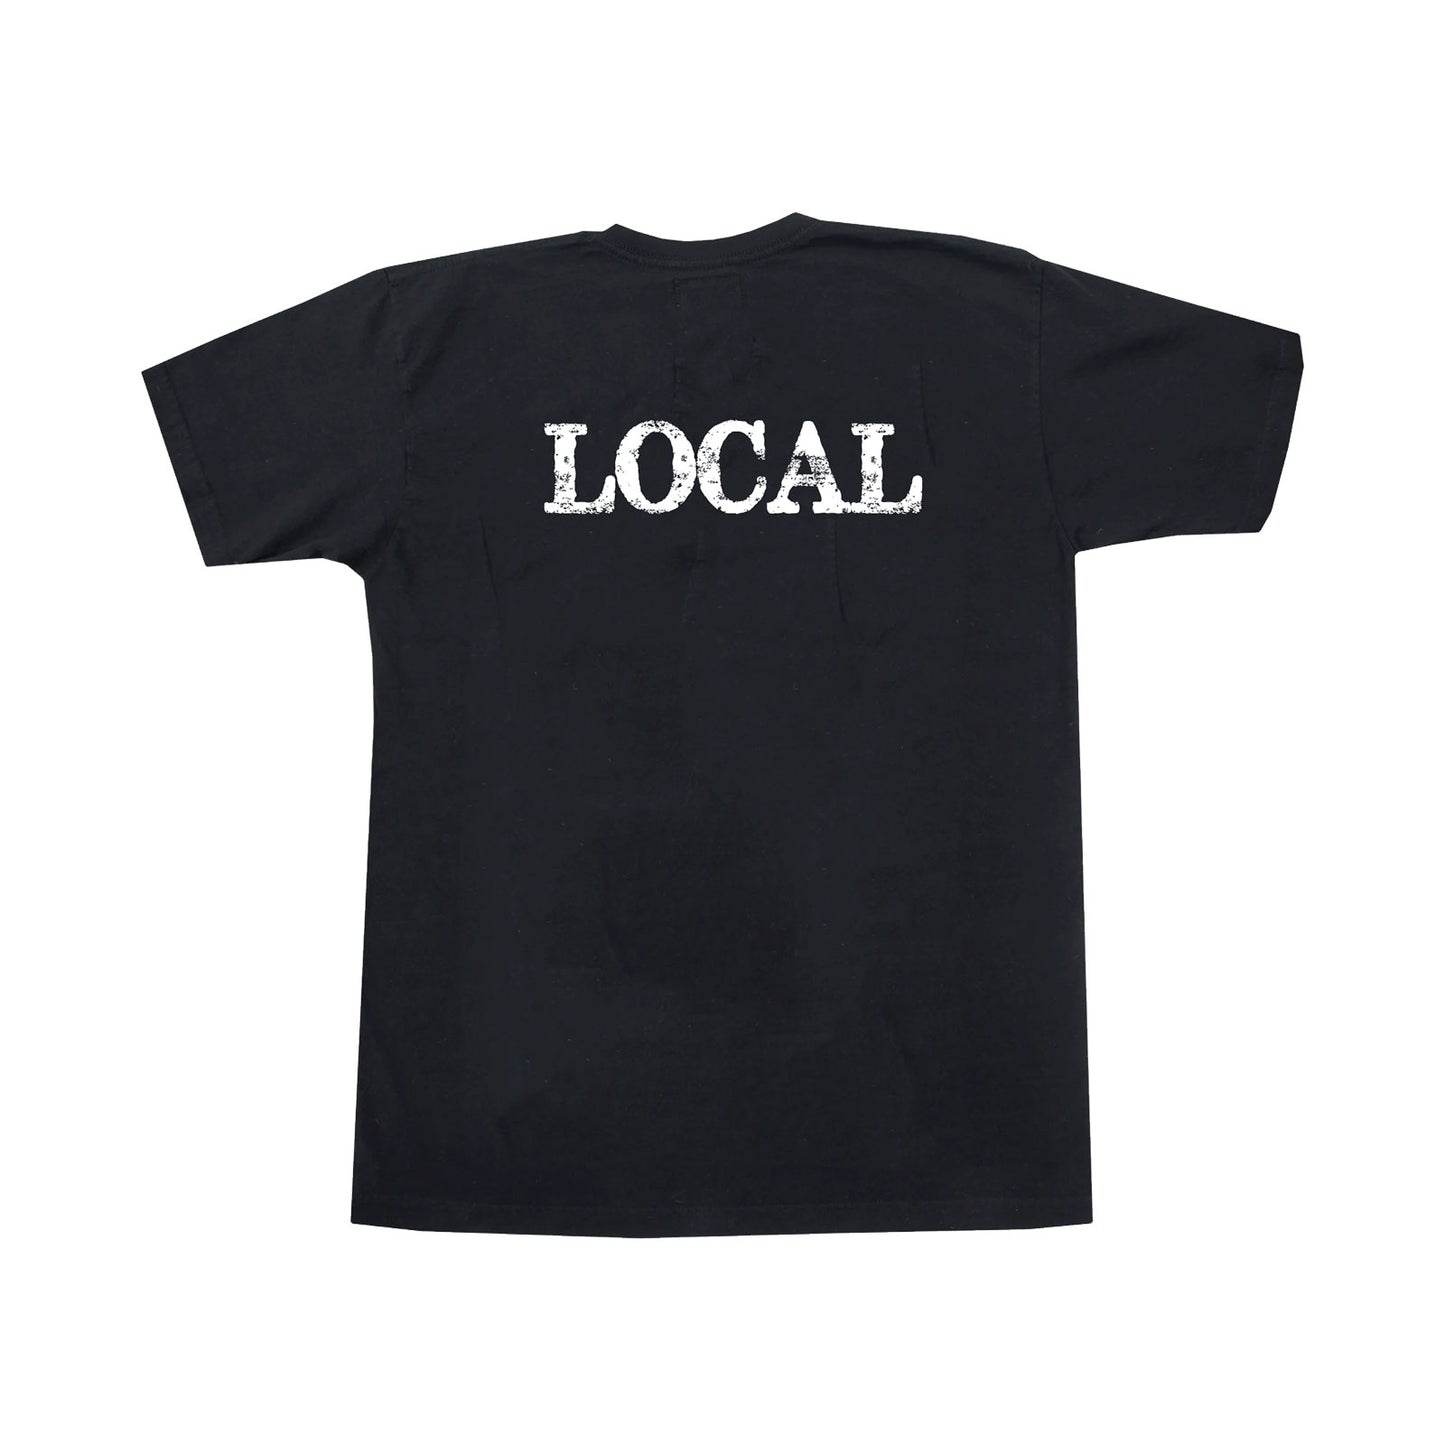 Modern General® Artwear Local T-Shirt in Black